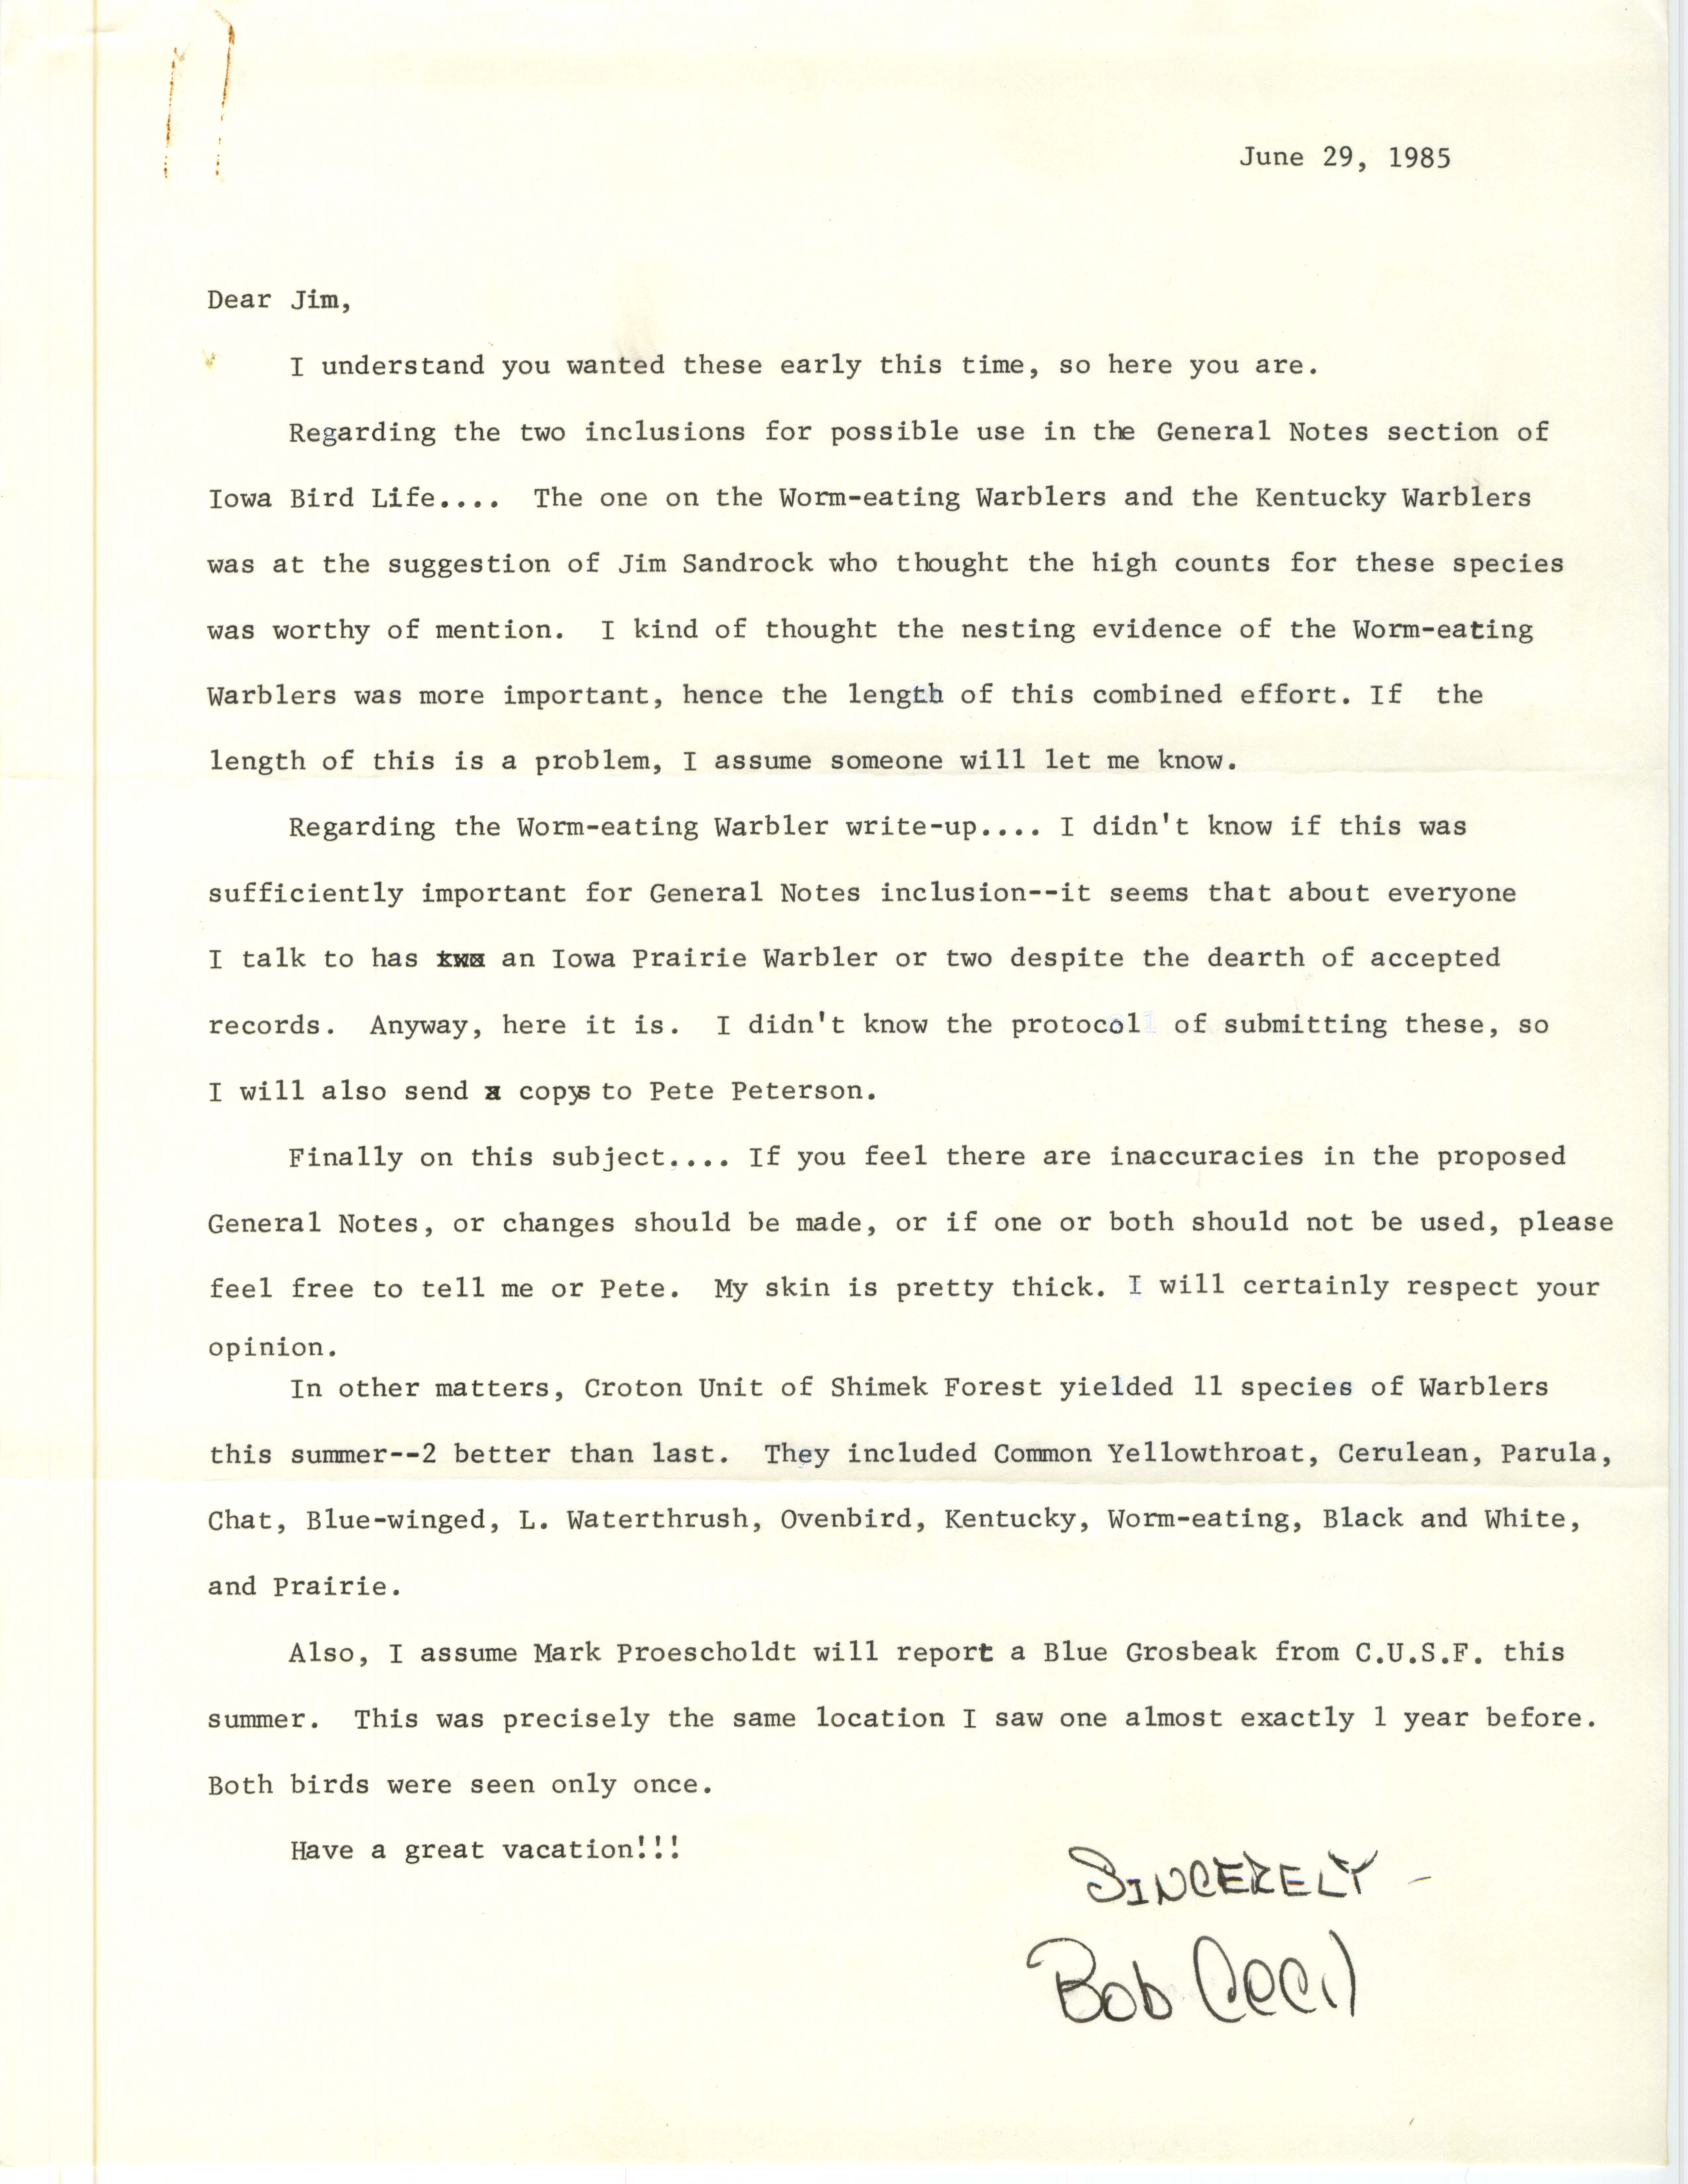 Robert I. Cecil letter to Jim Dinsmore regarding field note, June 29, 1985